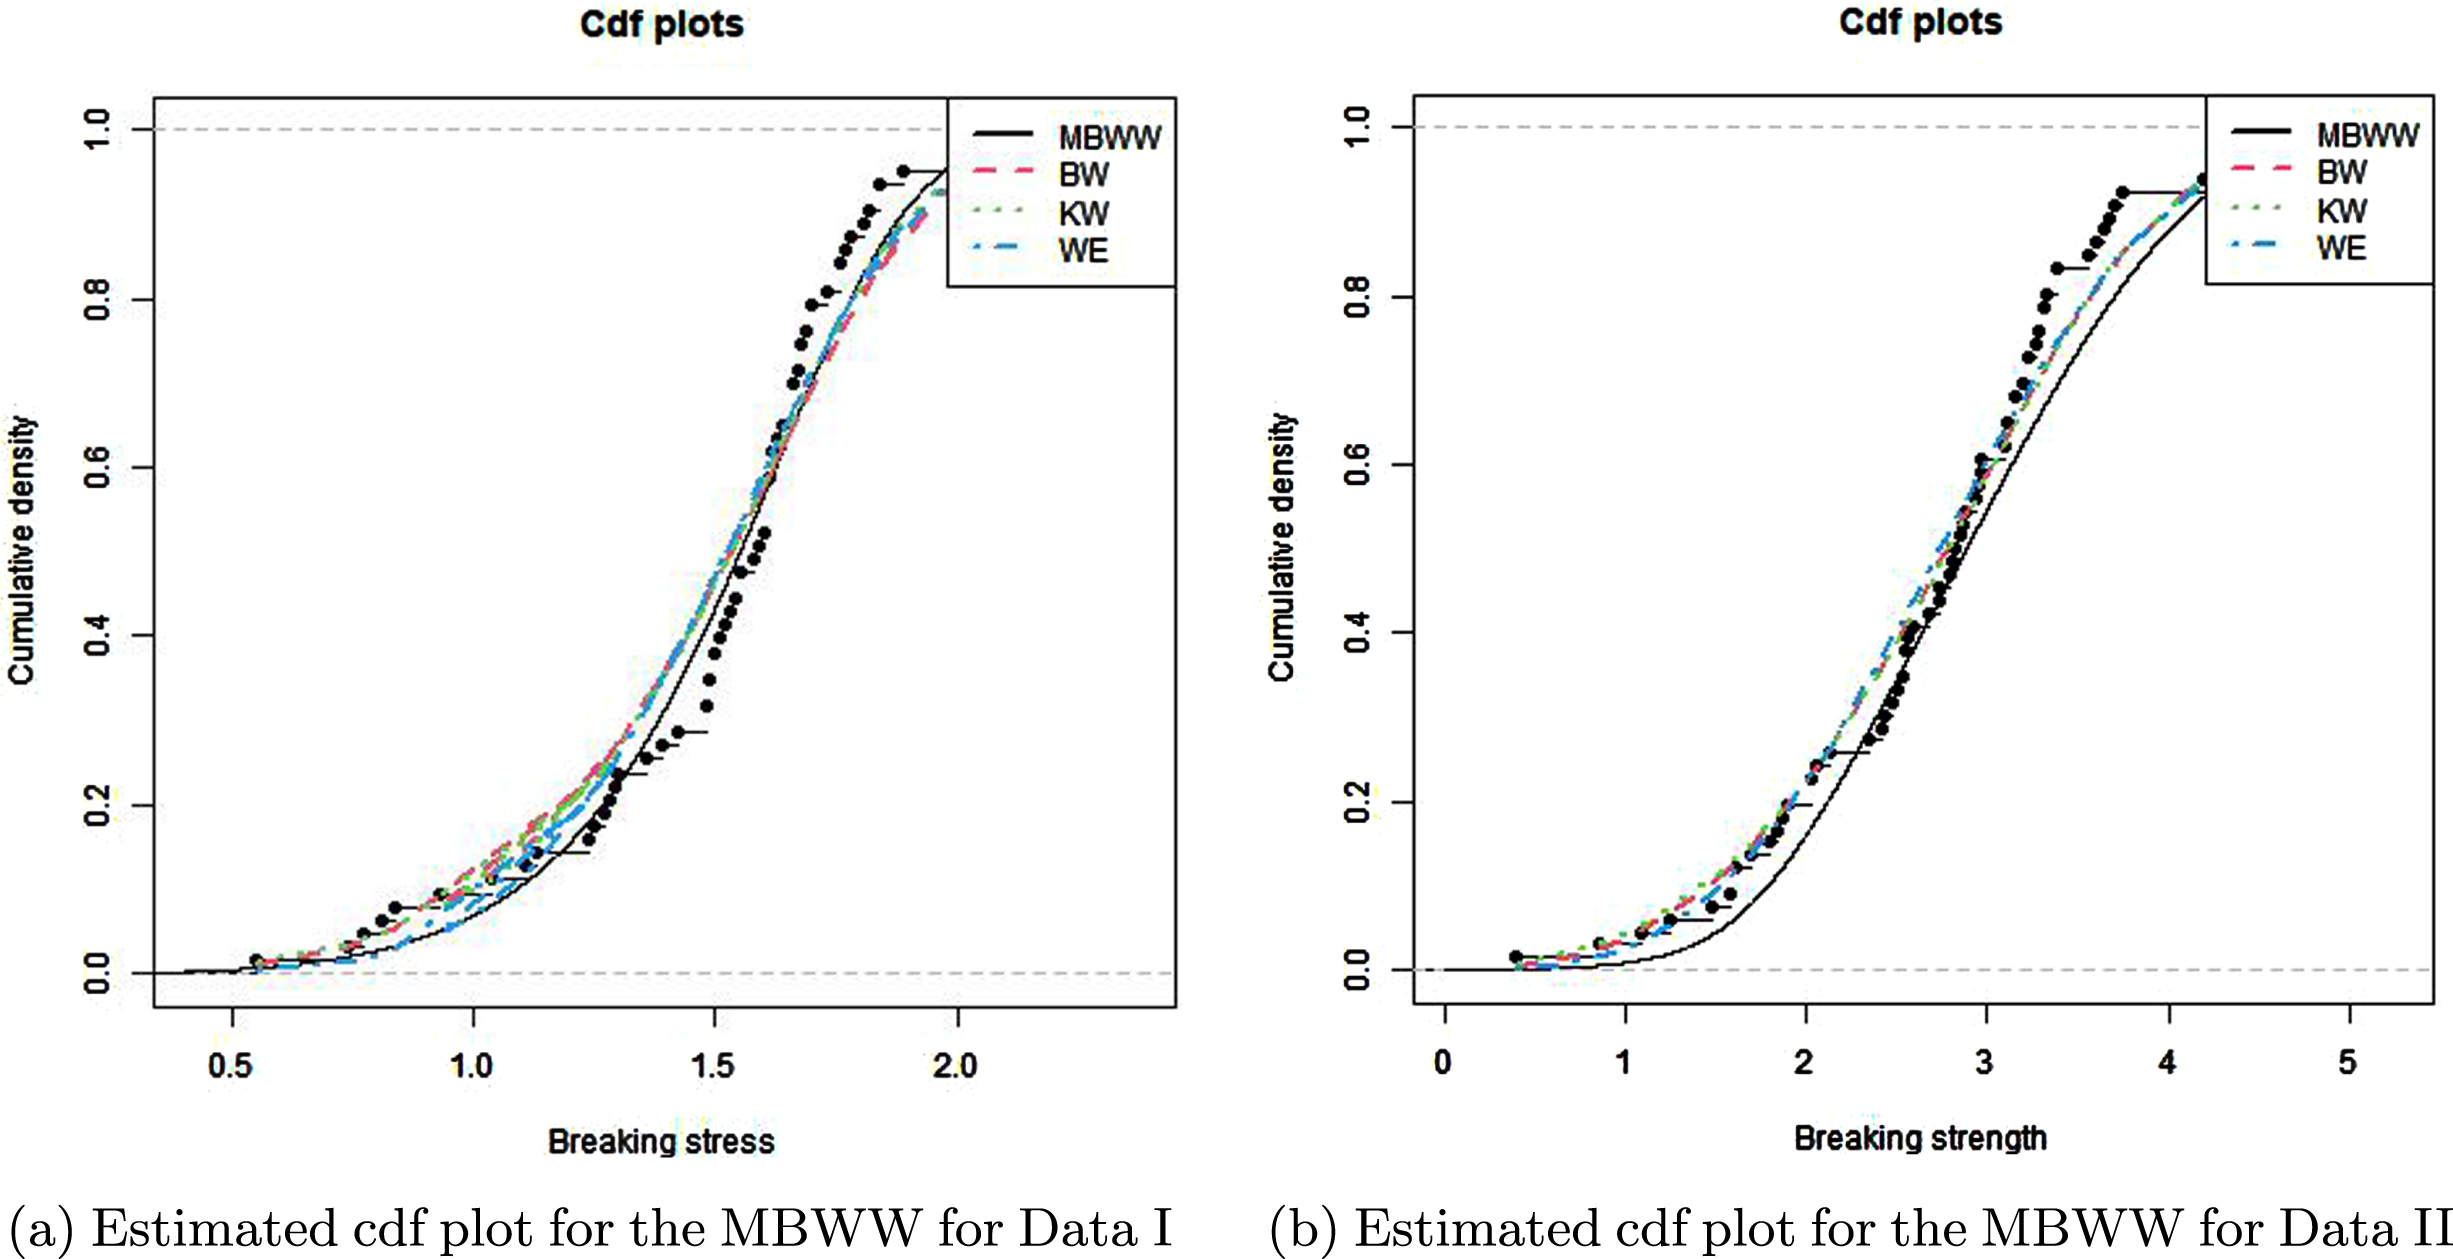 Estimated cdf plot for the MBWW